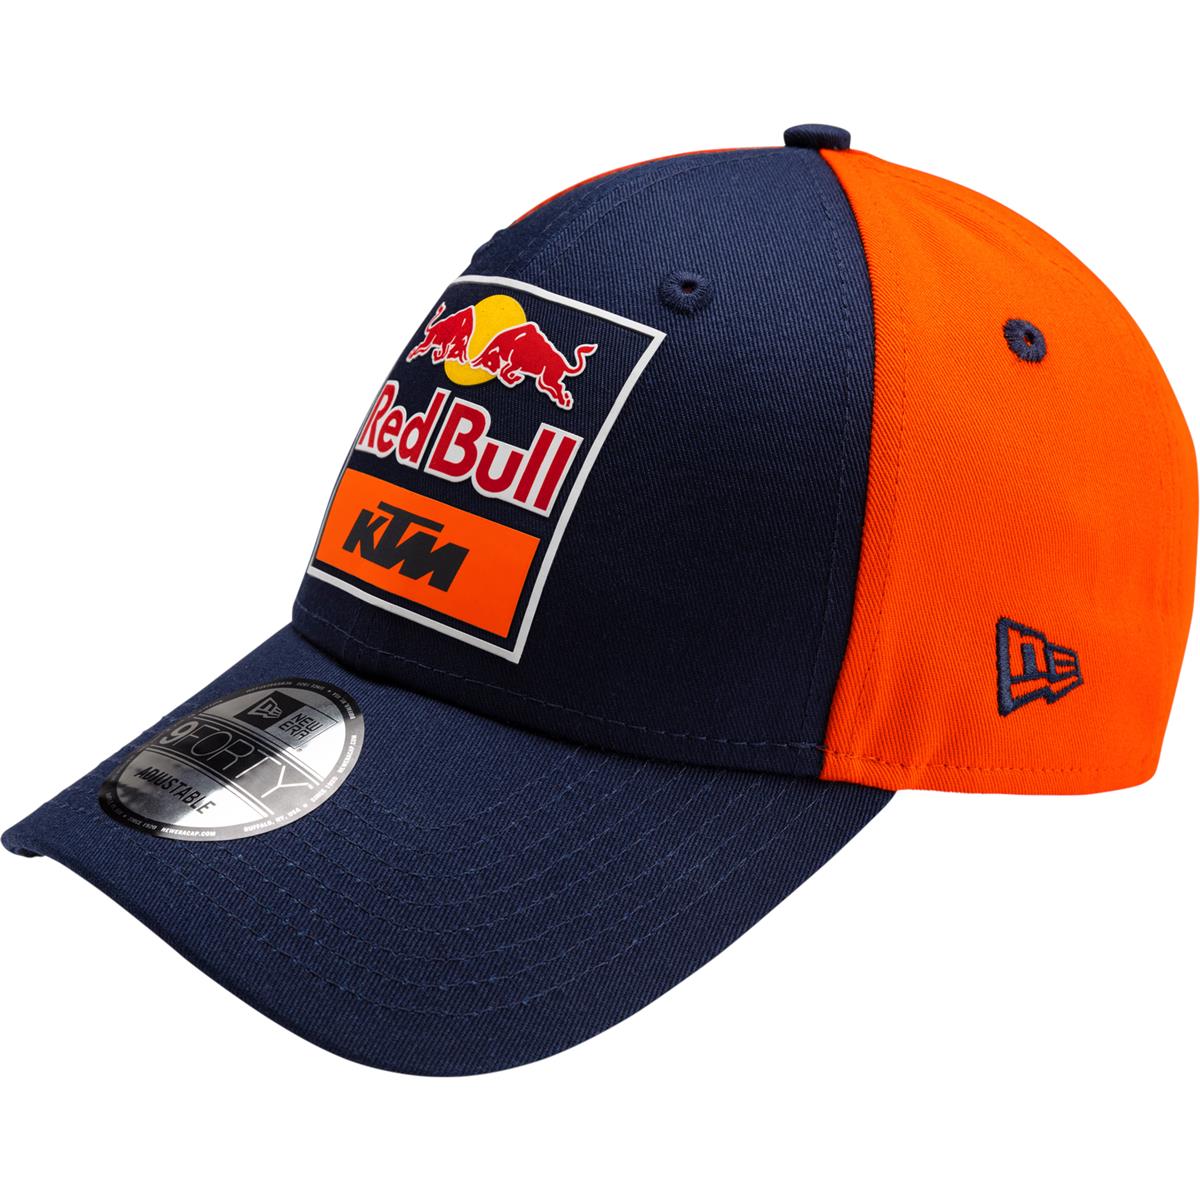 Red Bull Snapback Casquette KTM Official Teamline Replica - Curved - Navy/Orange